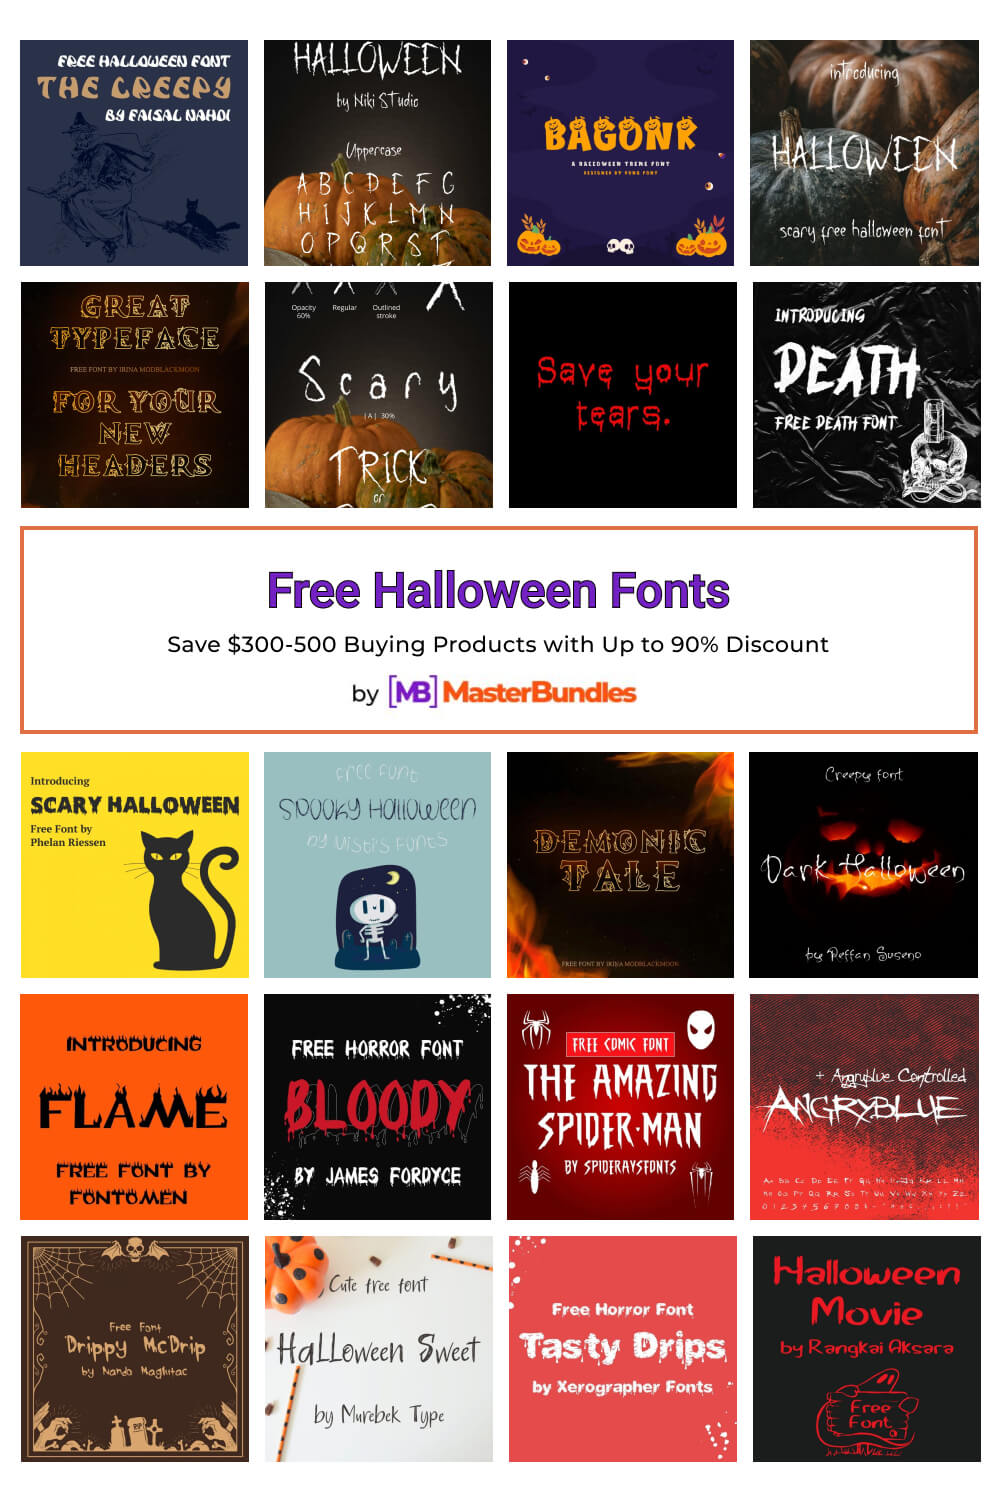 free halloween fonts pinterest image.